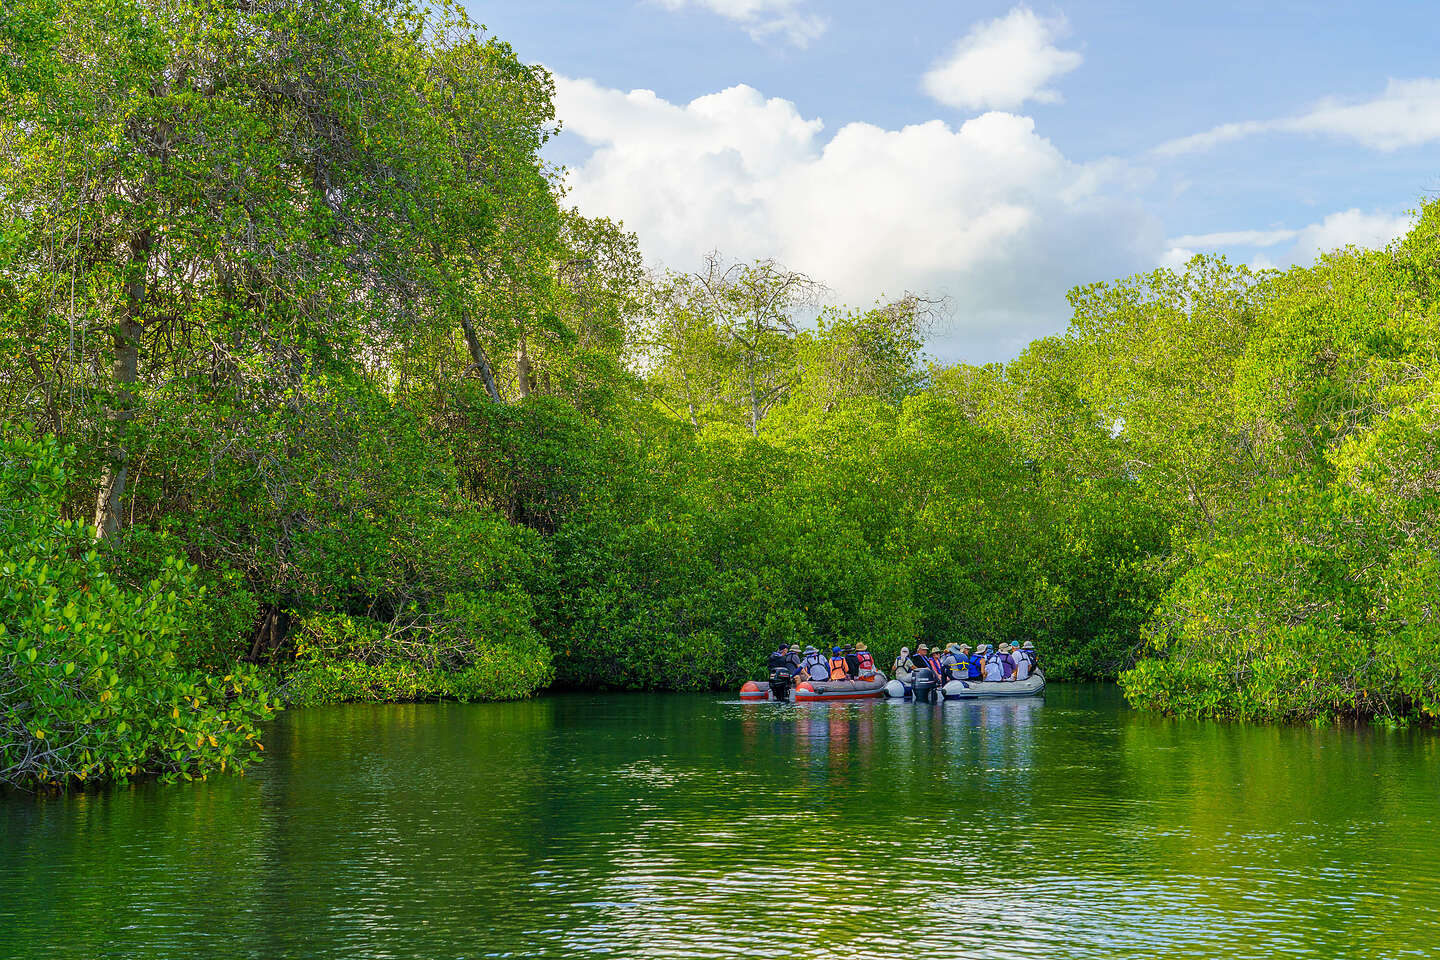 Exploring the mangroves